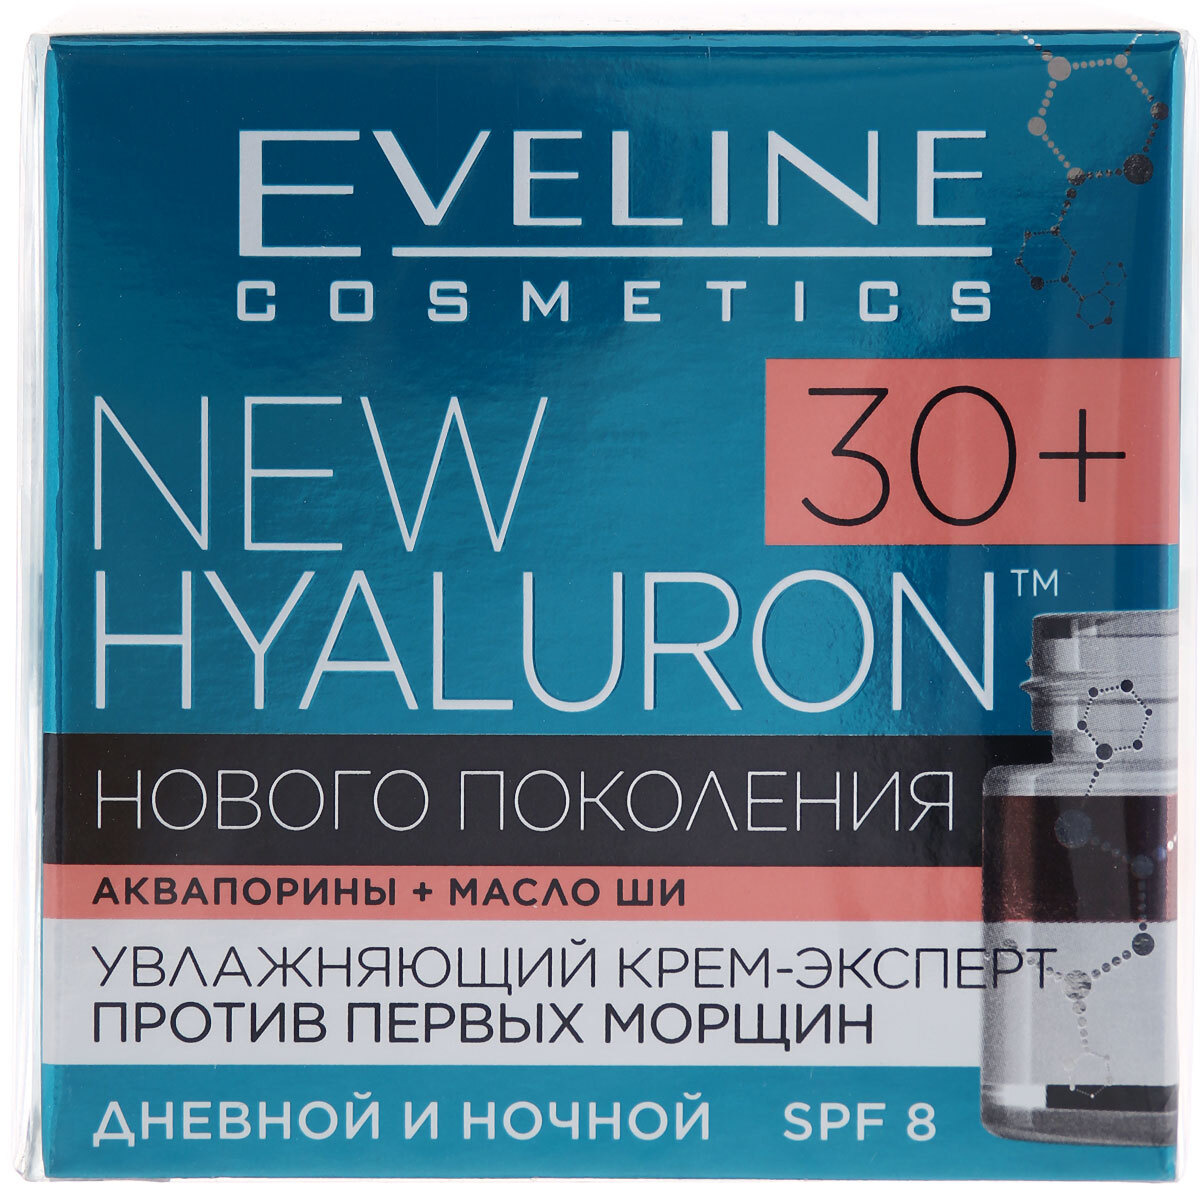   / Eveline New Hyaluron -         30+ 50 